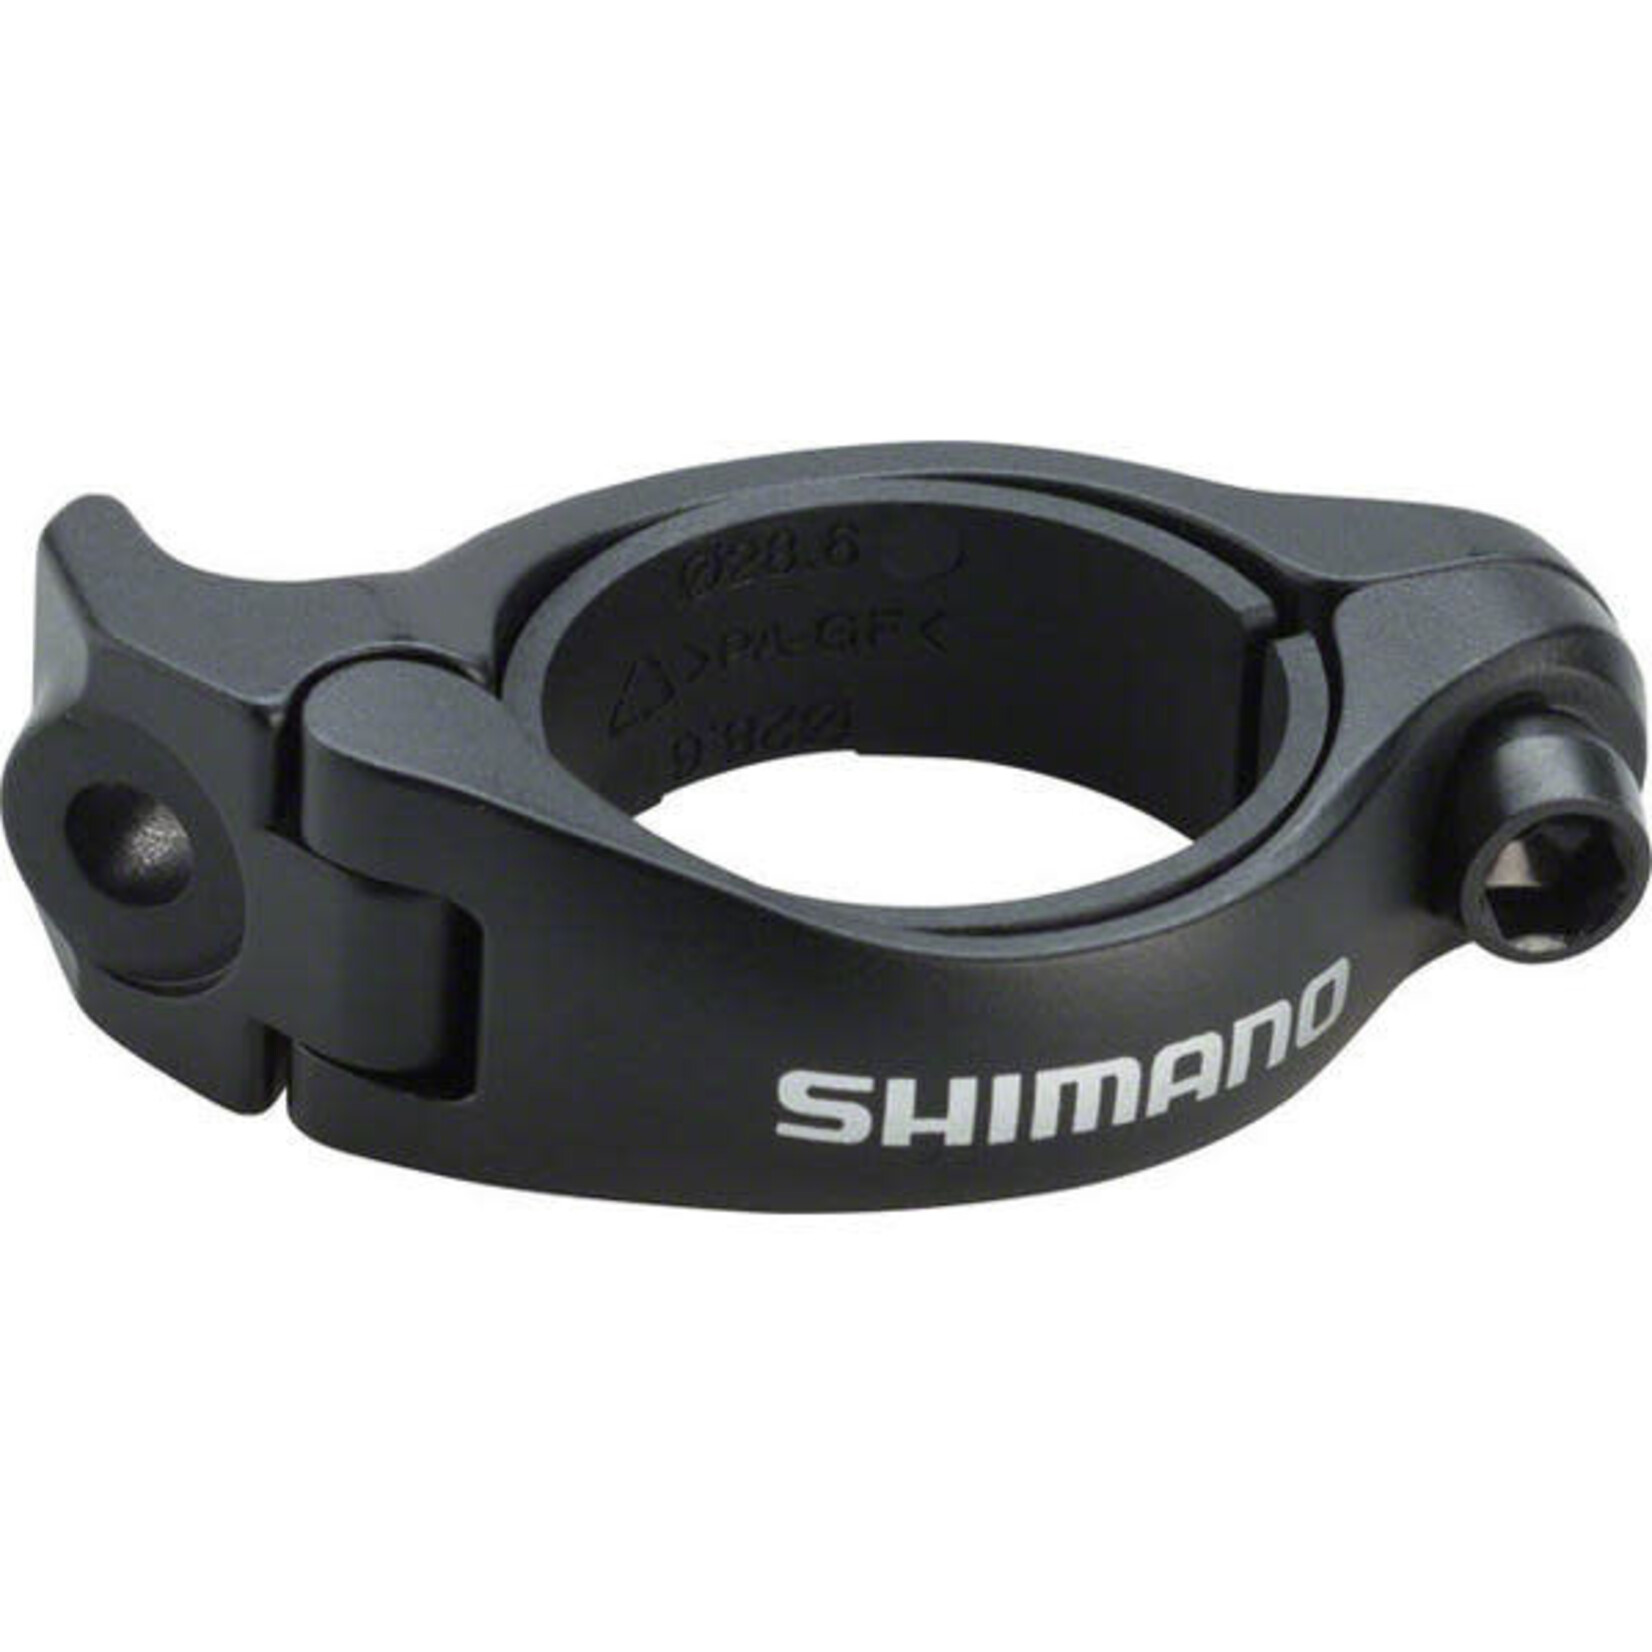 Shimano SM-AD91, Clamp band unit, 34.9mm